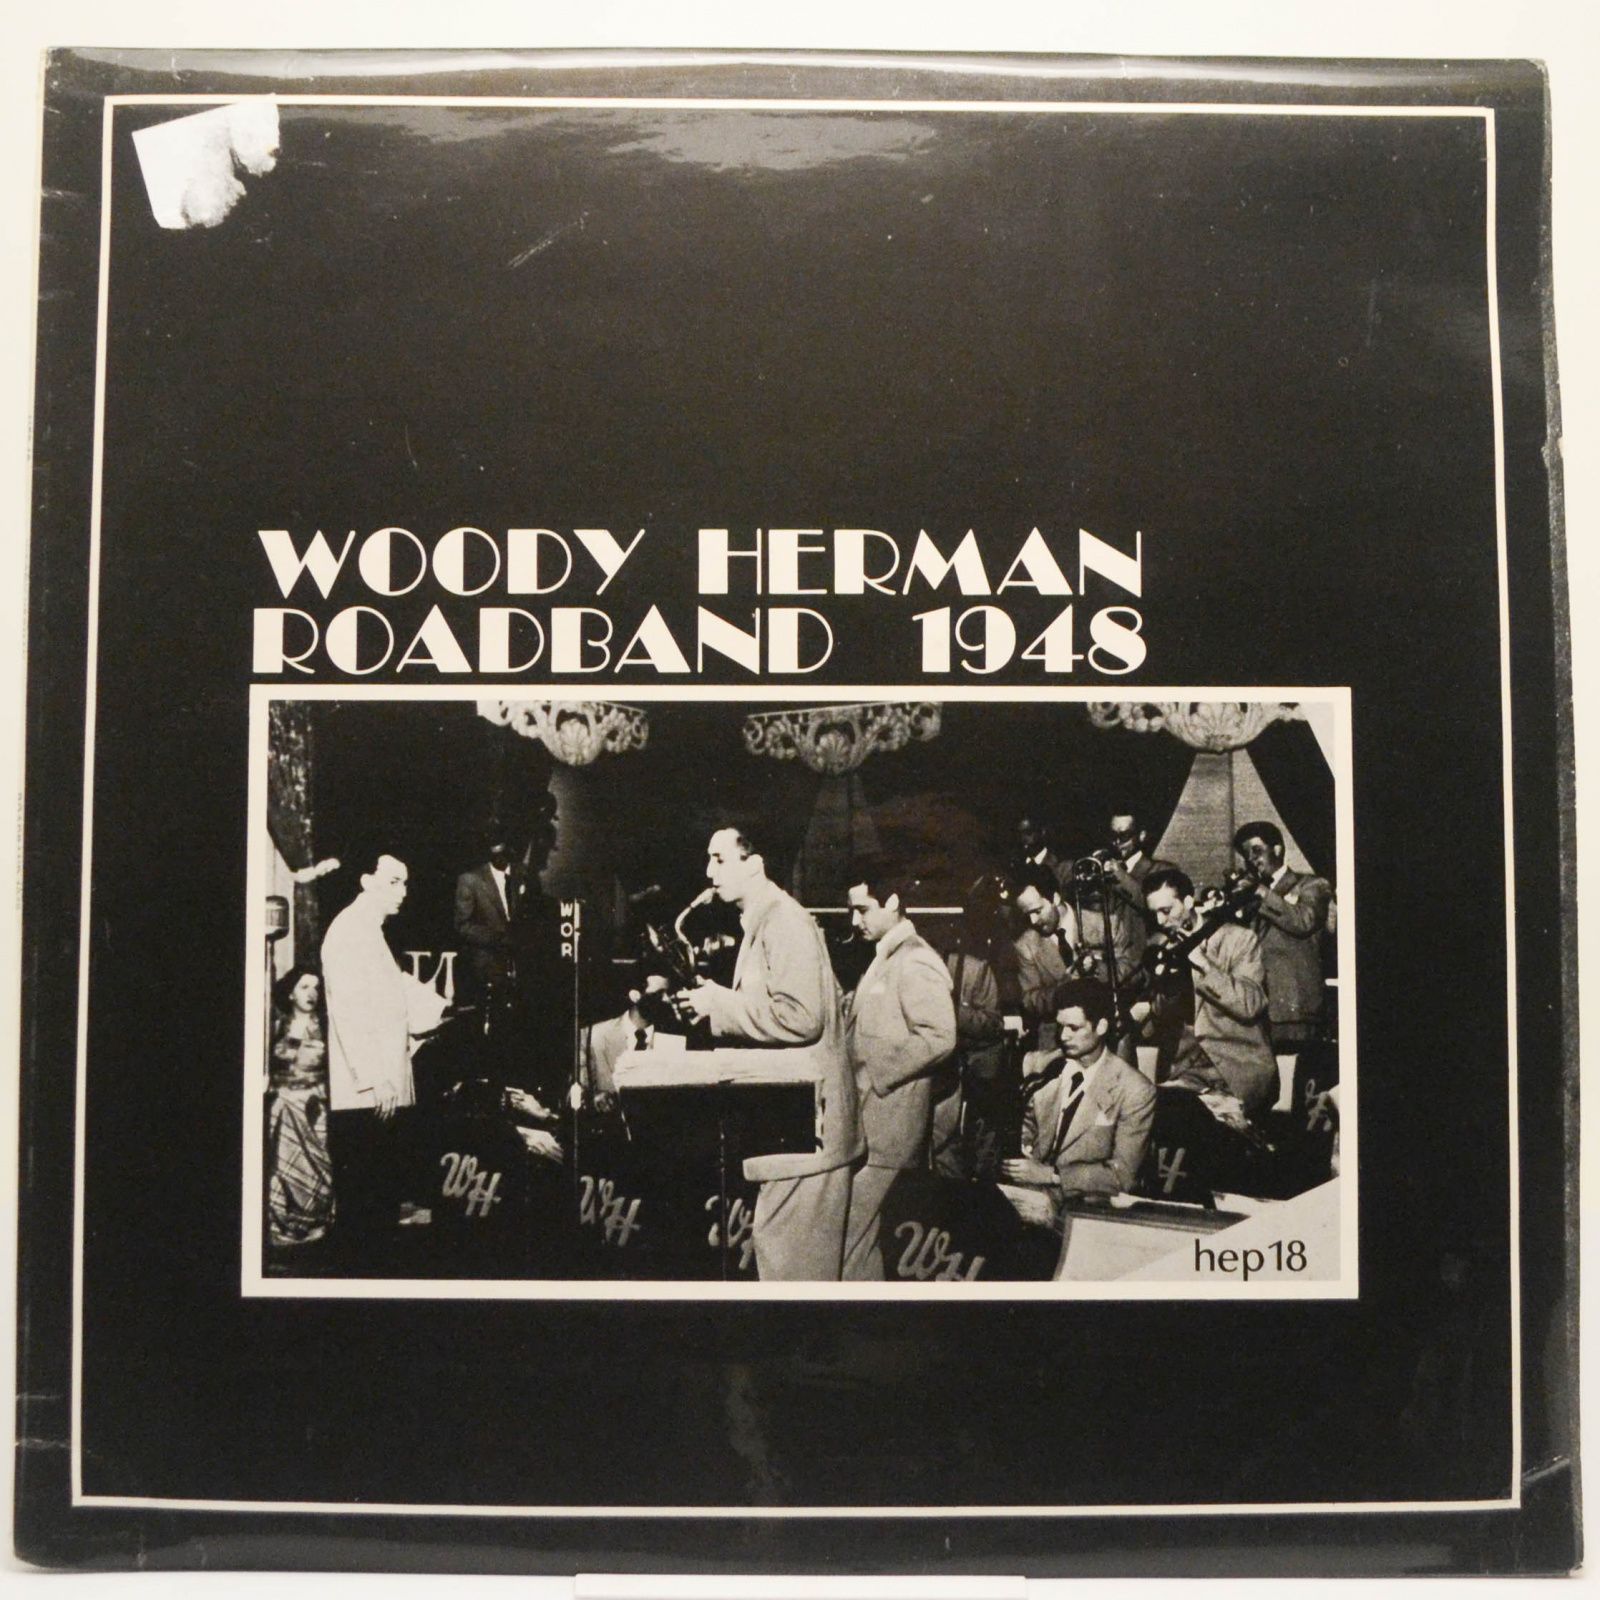 Woody Herman Roadband 1948, 1978